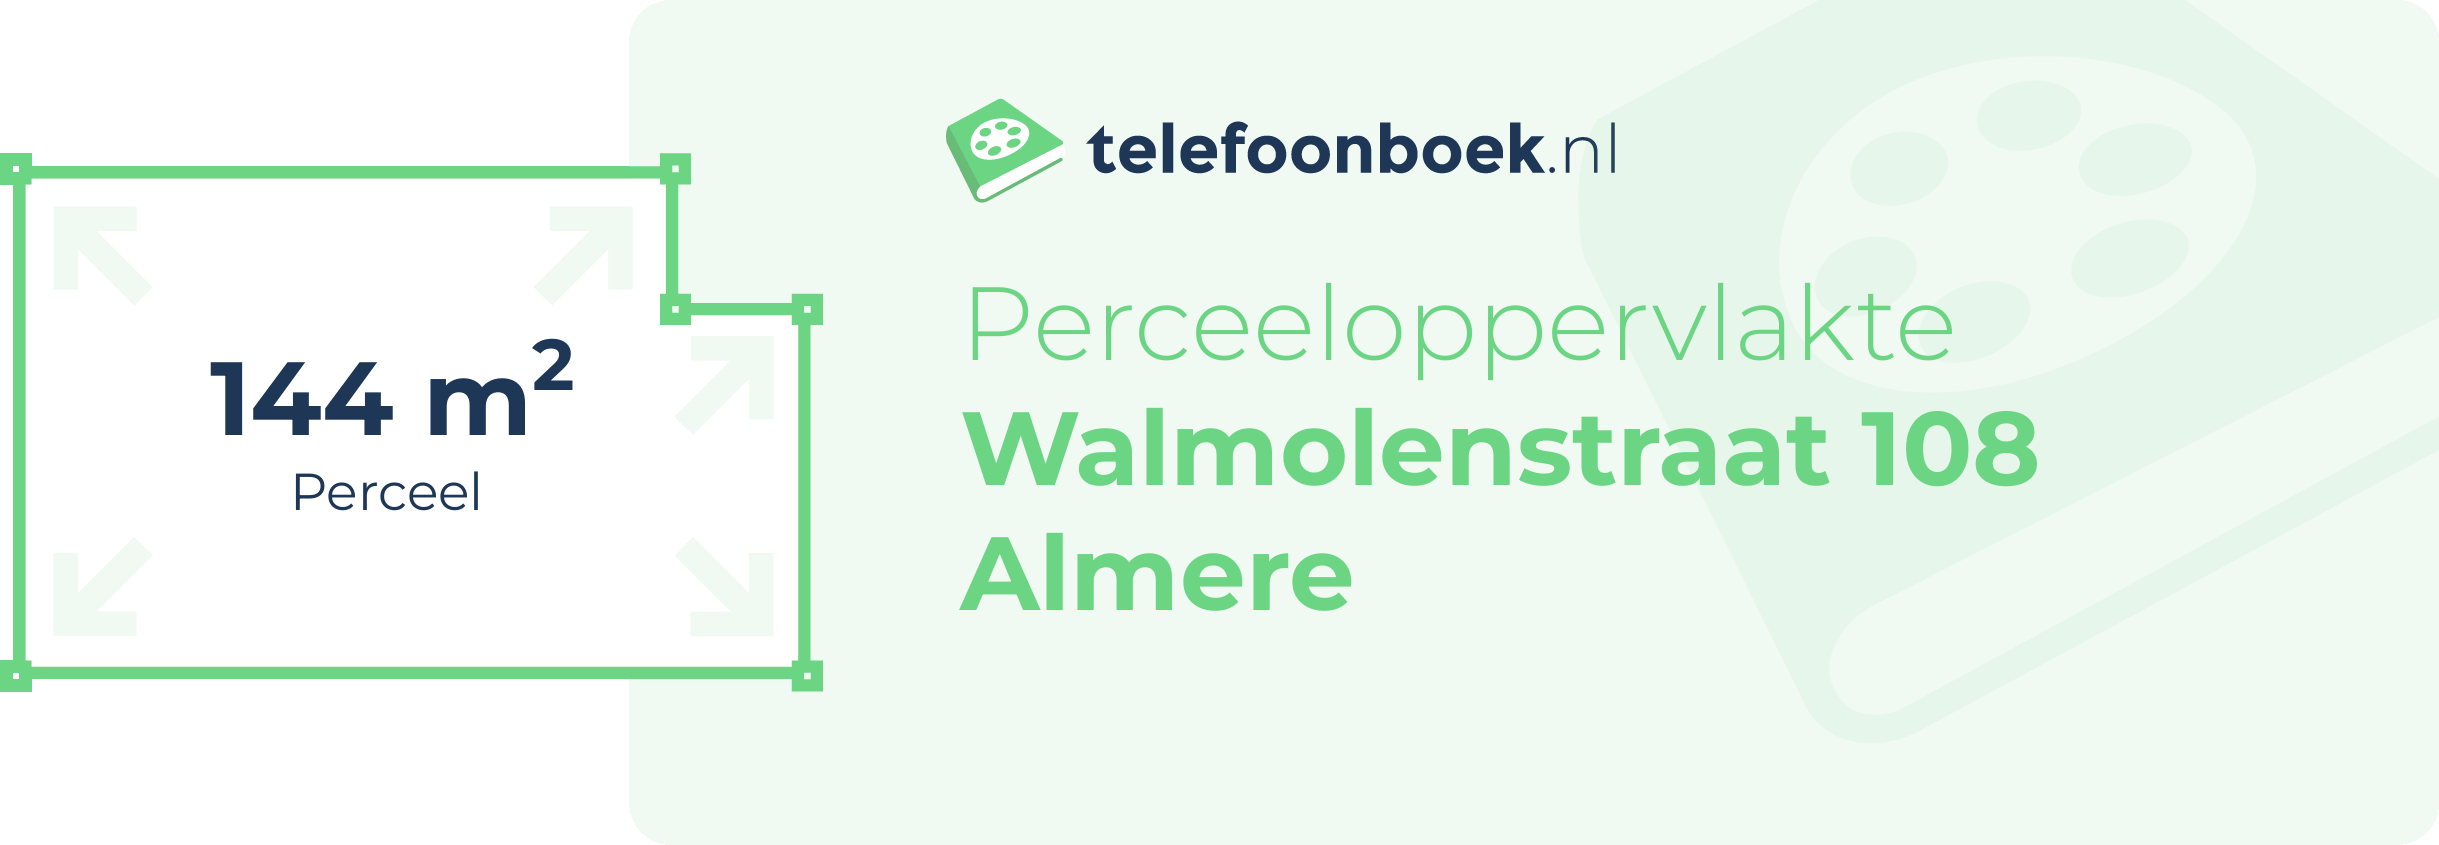 Perceeloppervlakte Walmolenstraat 108 Almere